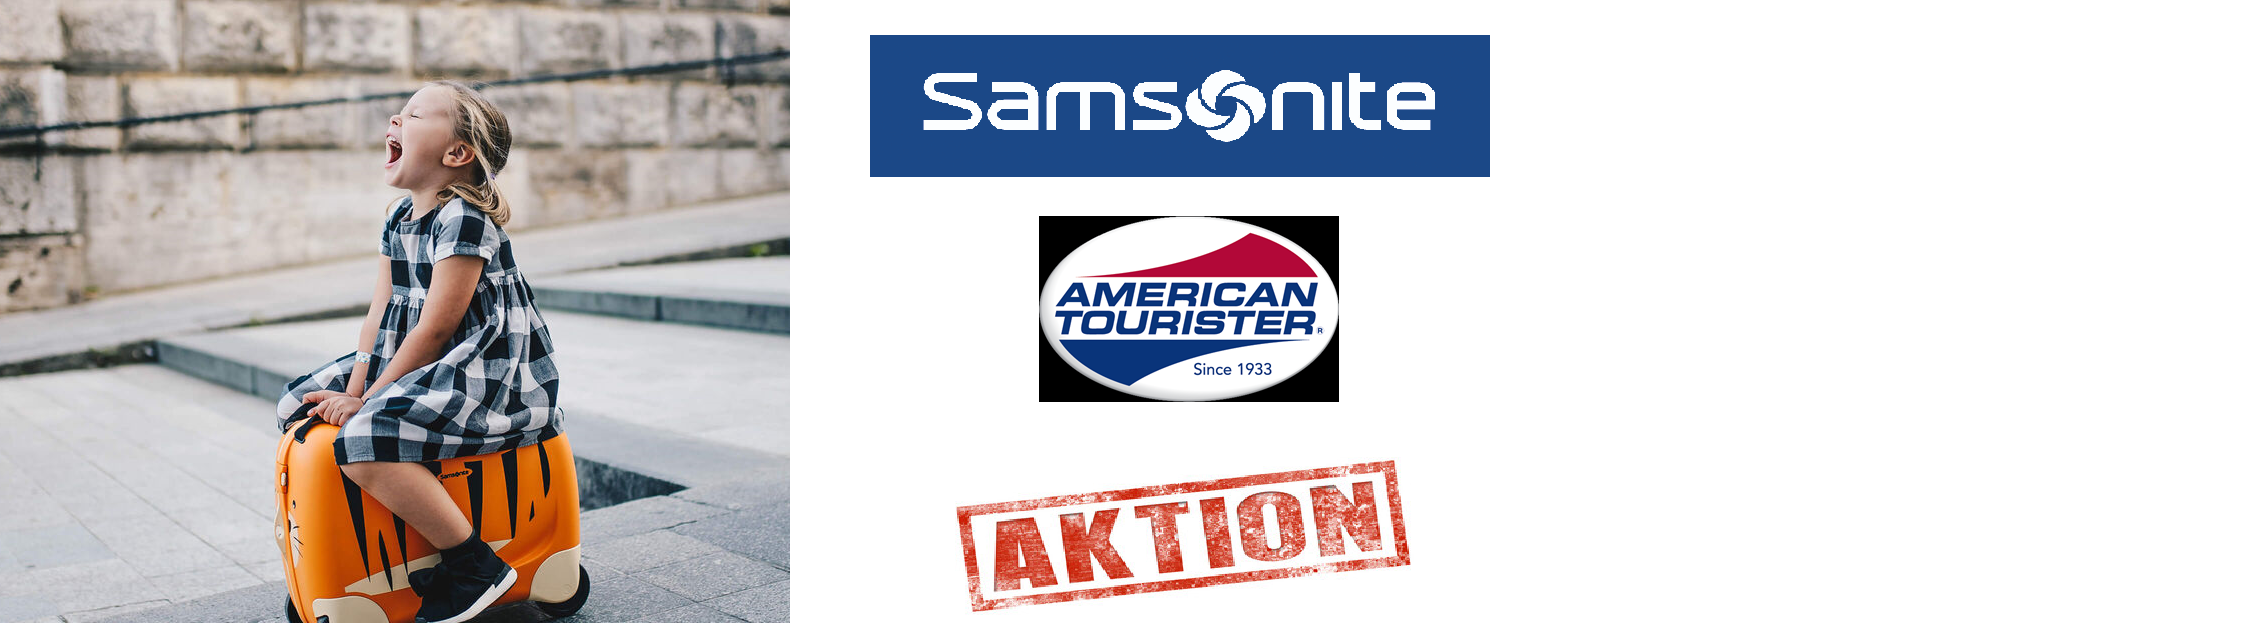 Samsonite - American Tourister - Aktion 